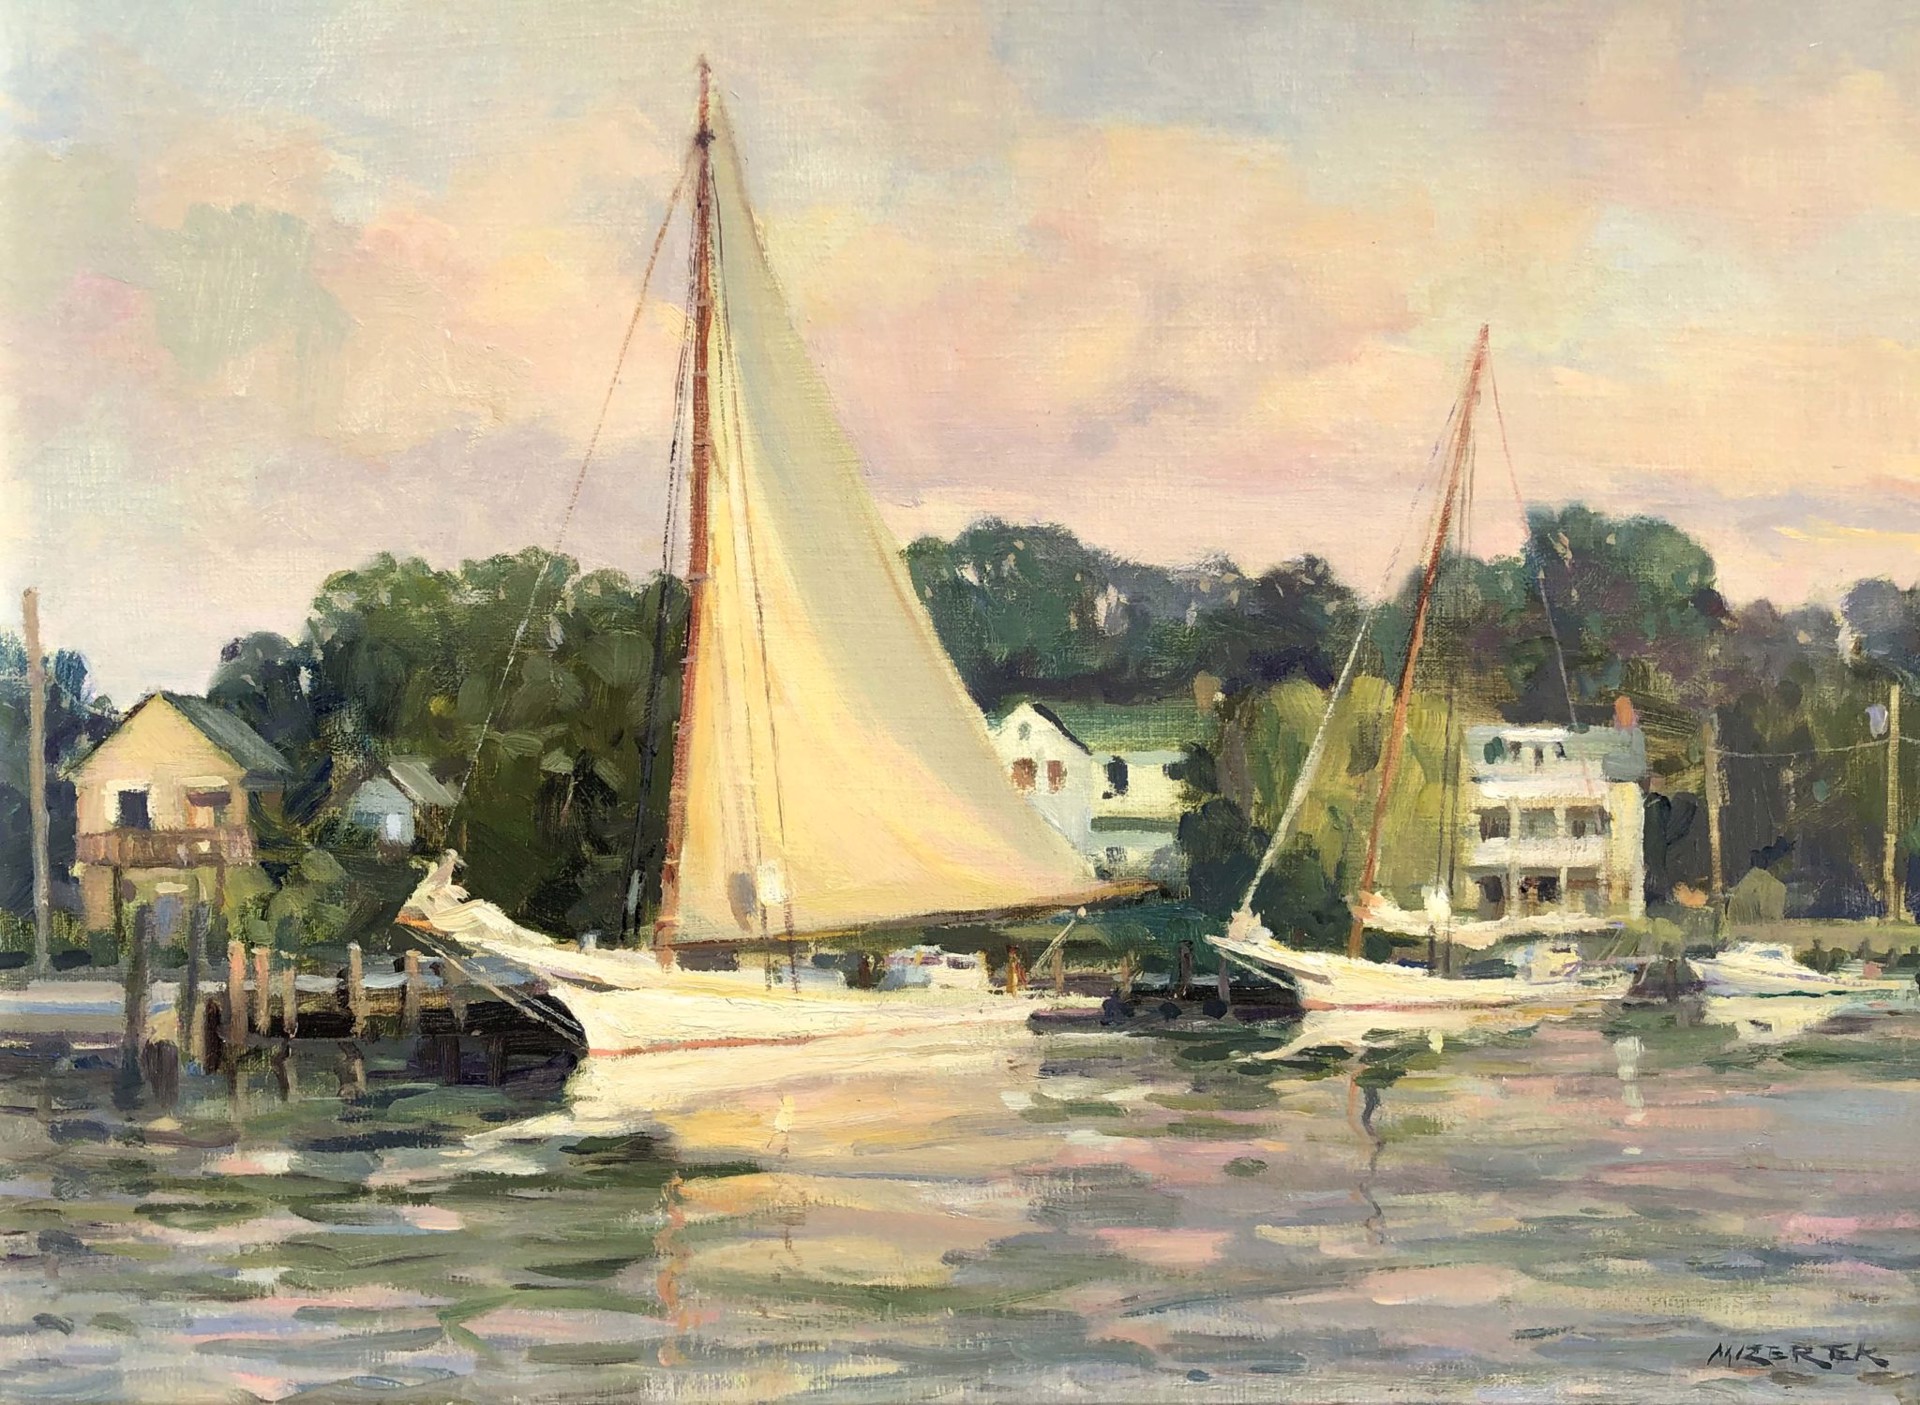 Departing the Harbor by Leonard Mizerek